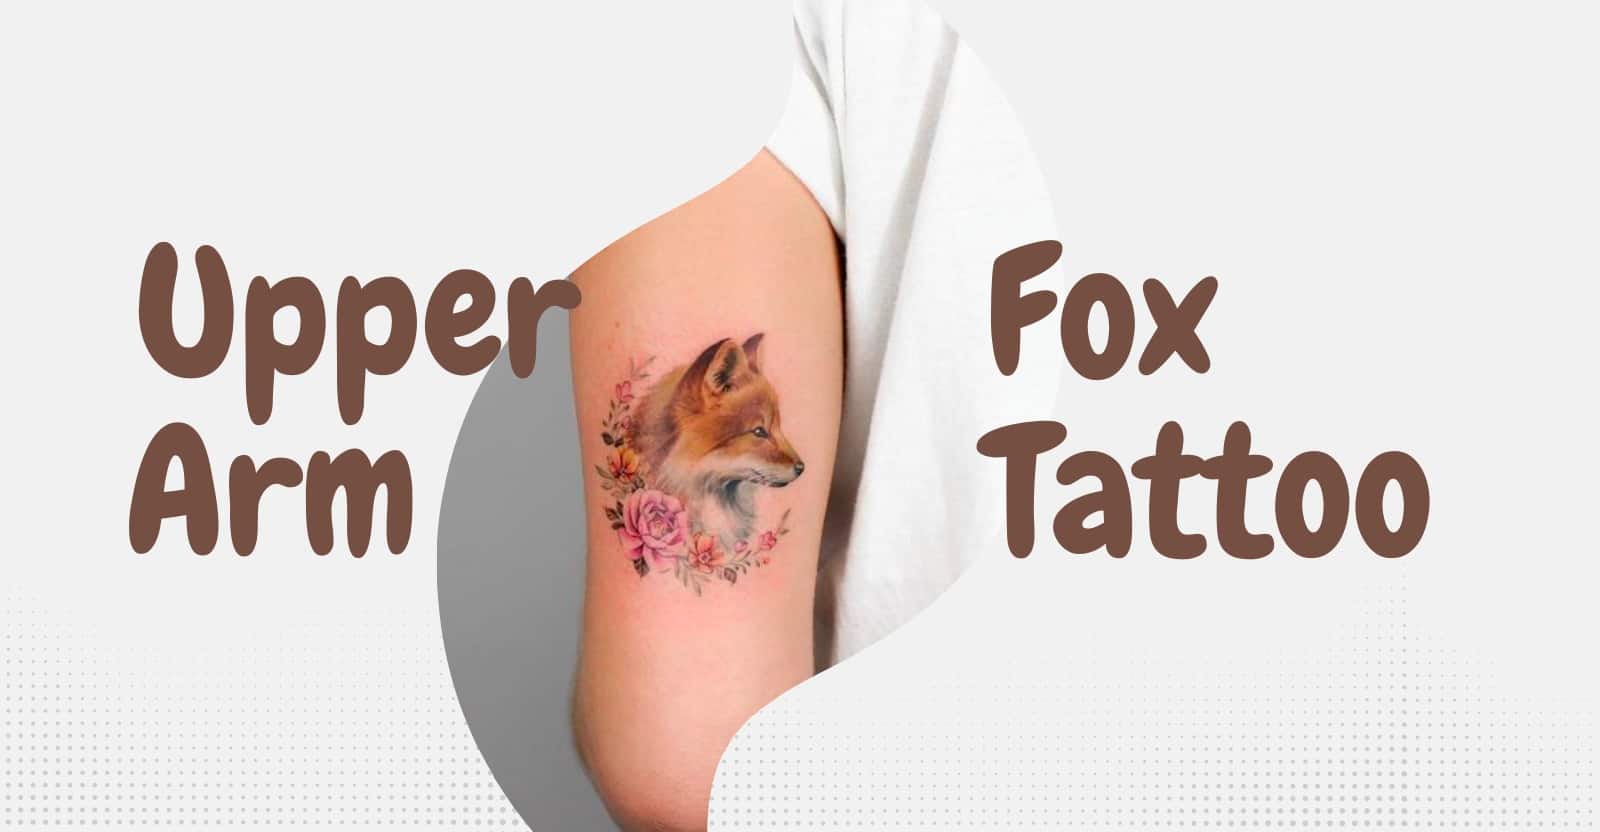 fox tattoo designs for upper arm